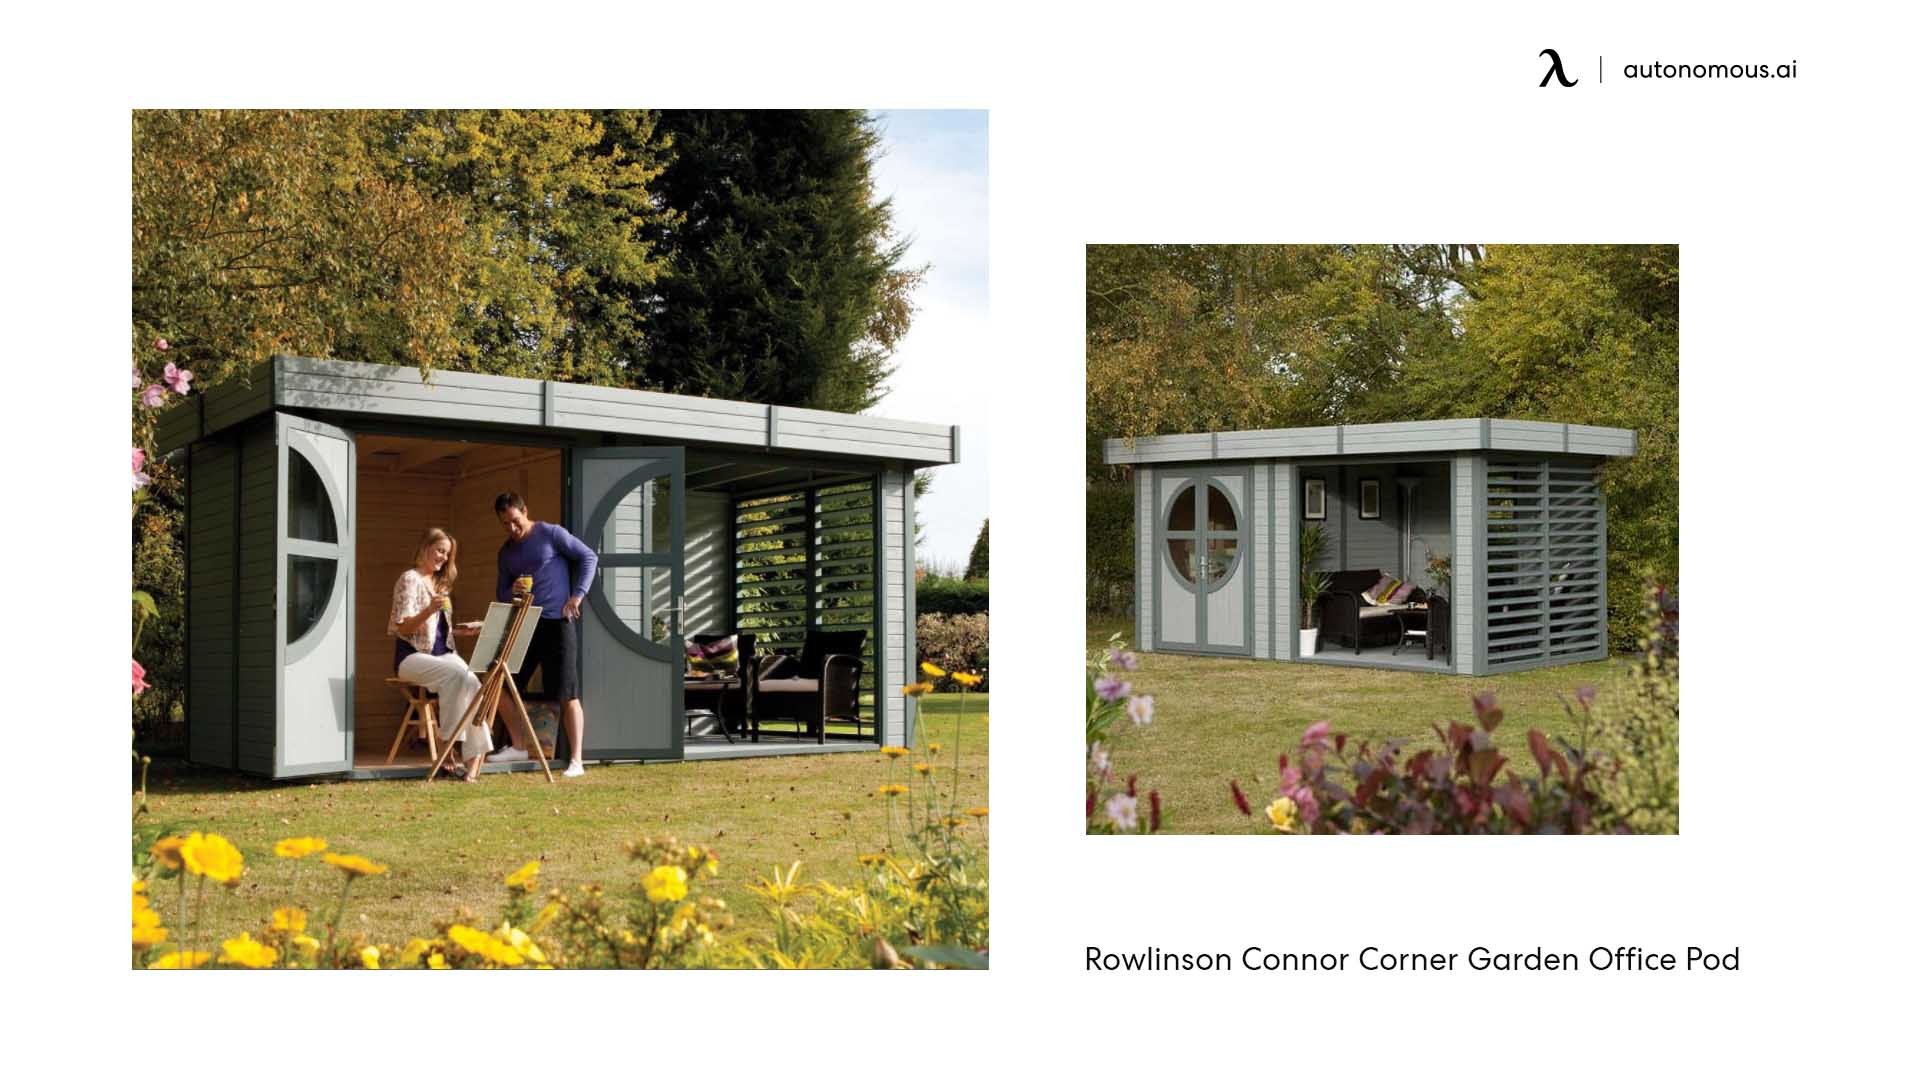 Rowlinson Connor Corner Garden Office Pod